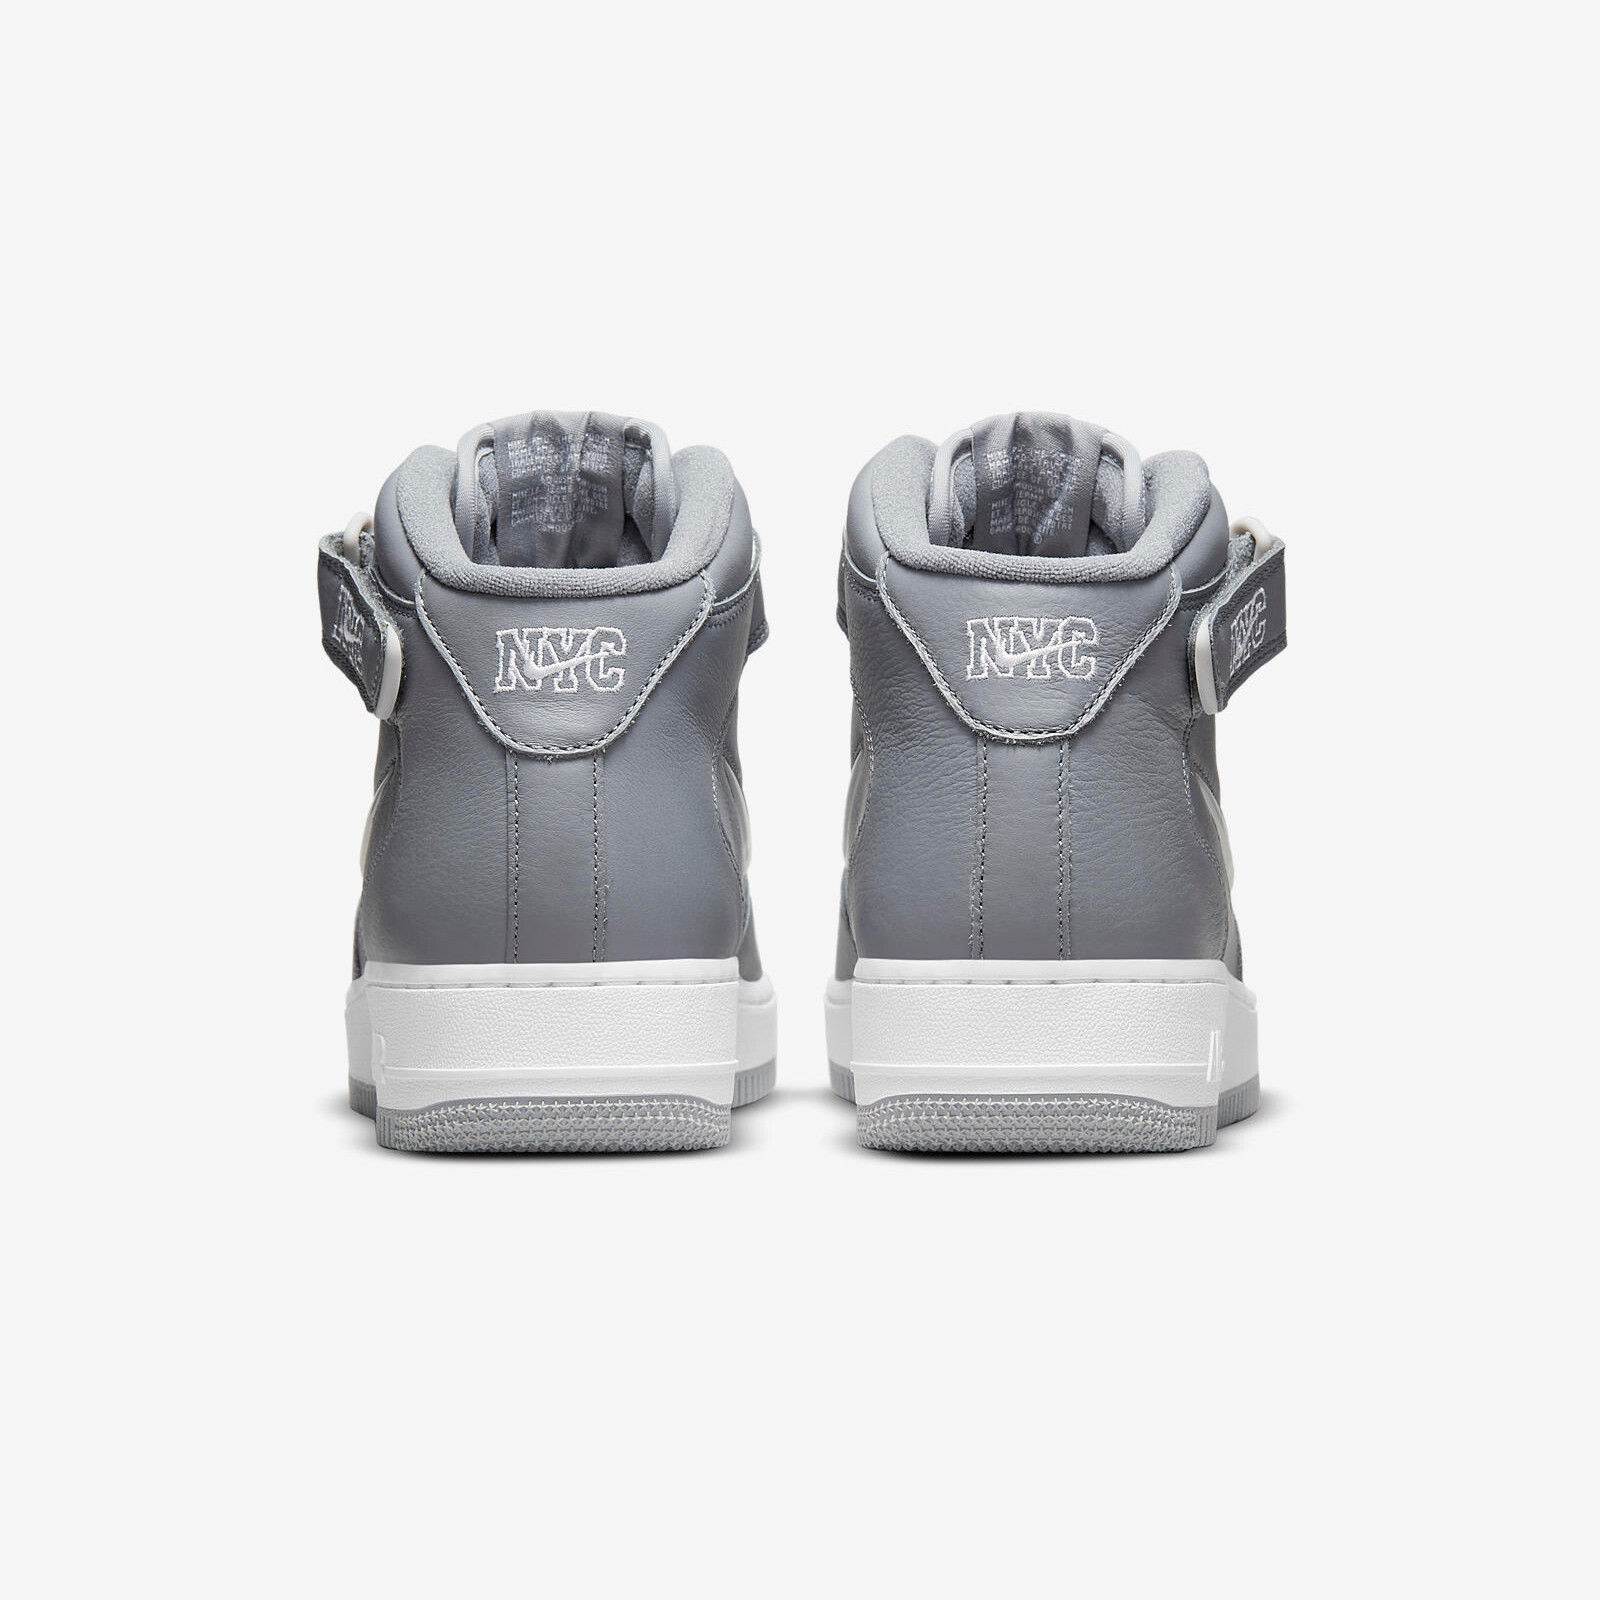 Nike Air Force 1 Mid QS
Grey / White / Silver